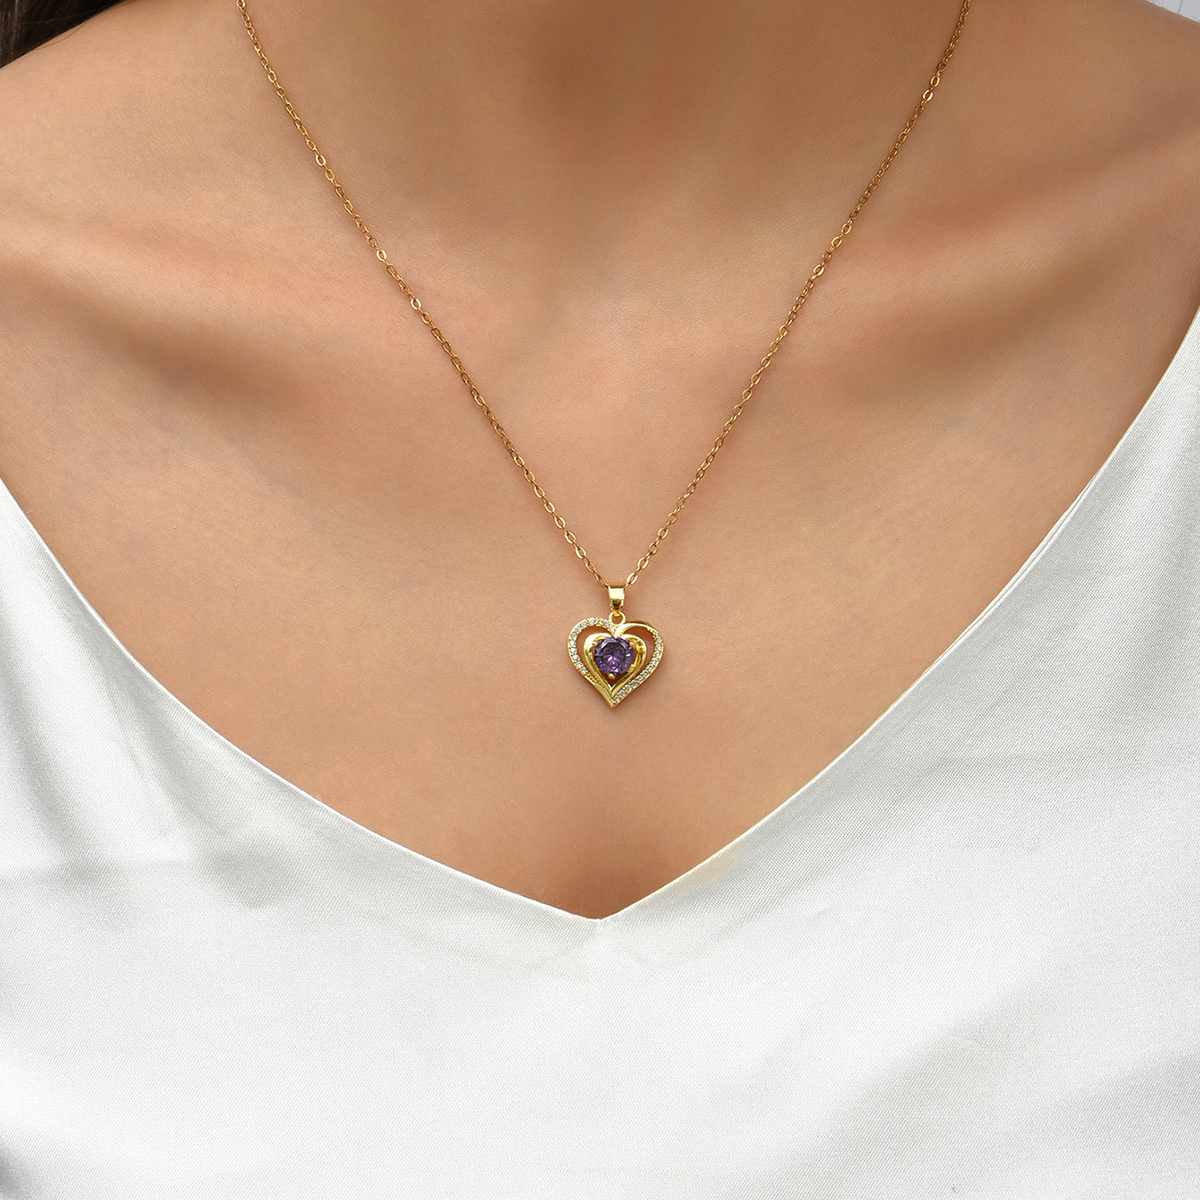 10pcs Gold Tone Heart-shaped Amethyst Crystal Pendant Necklace|GCJ294|UK SELLER